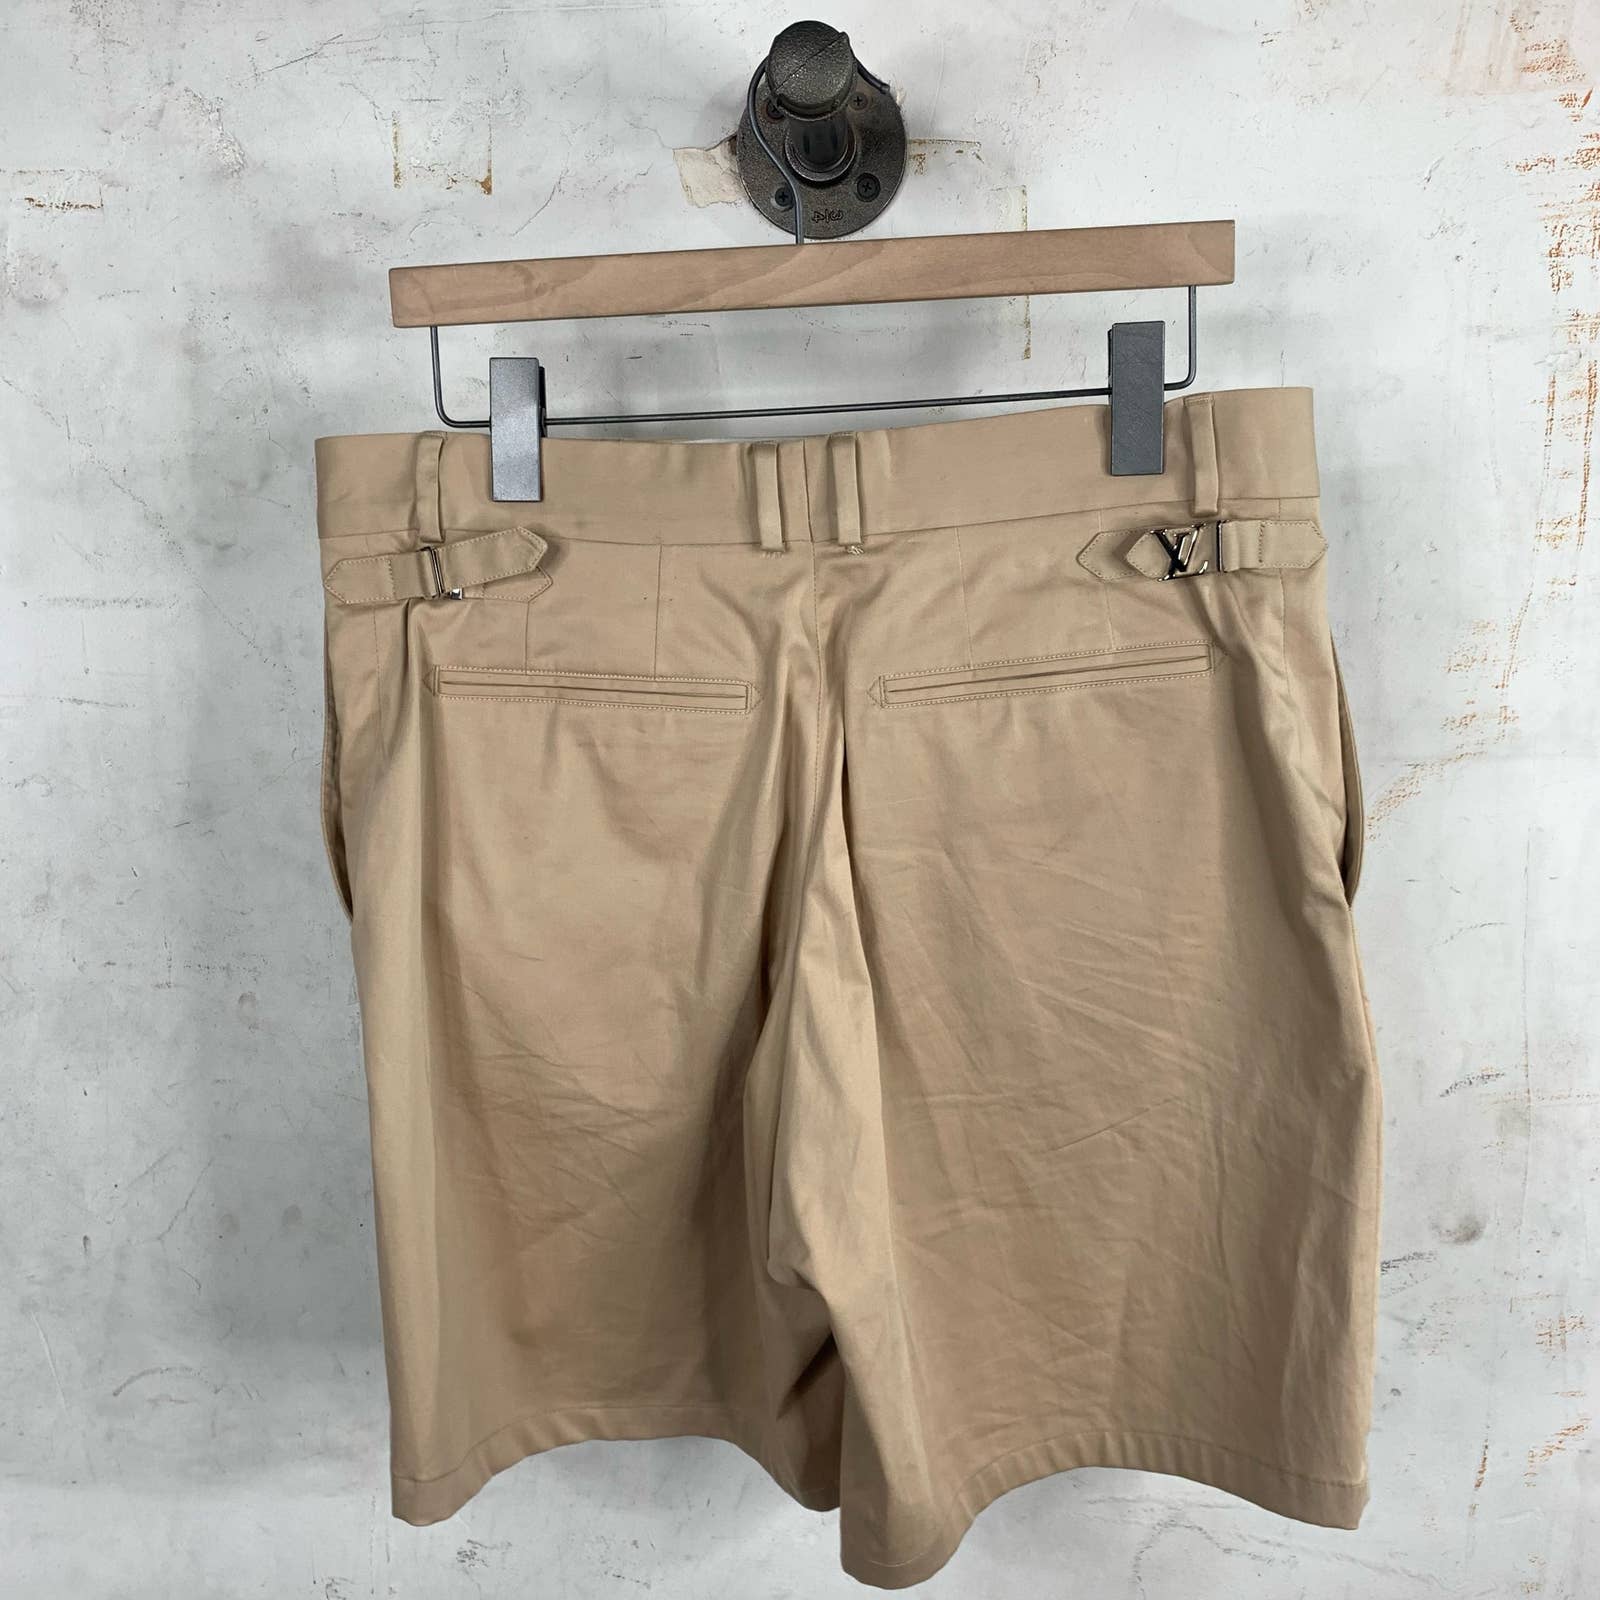 Louis Vuitton Kim Jones Khaki Shorts